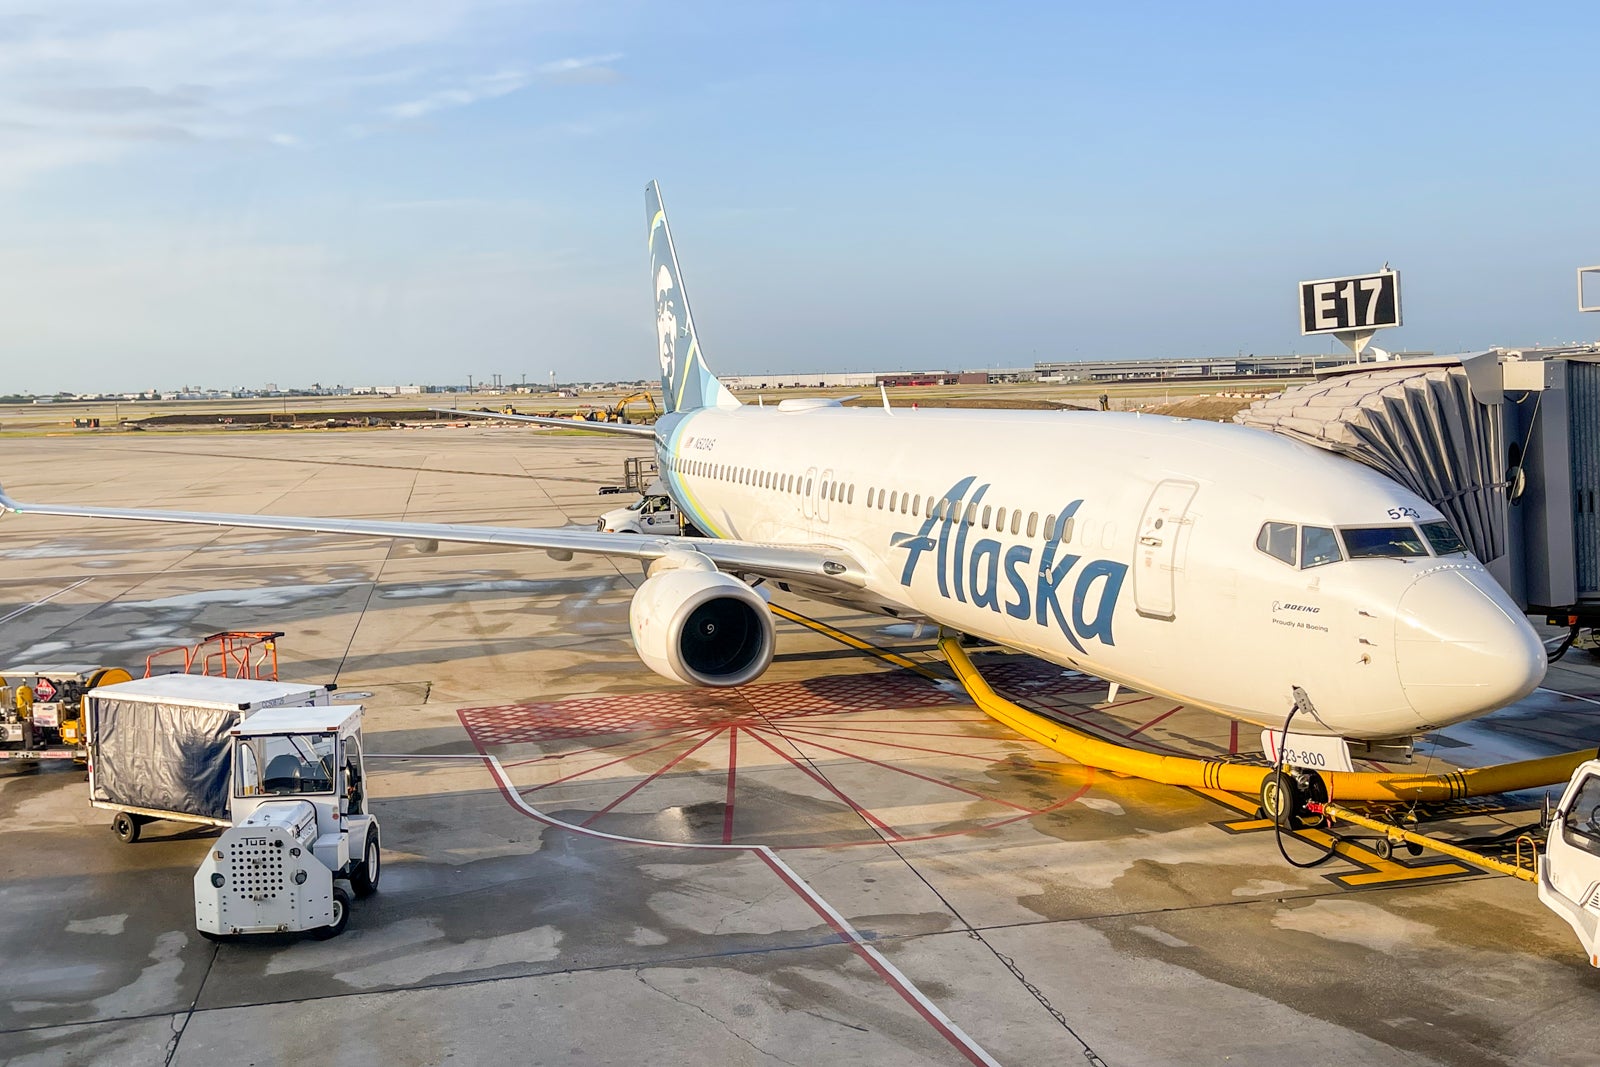 Alaska Airlines Boeing 737-800 at gate